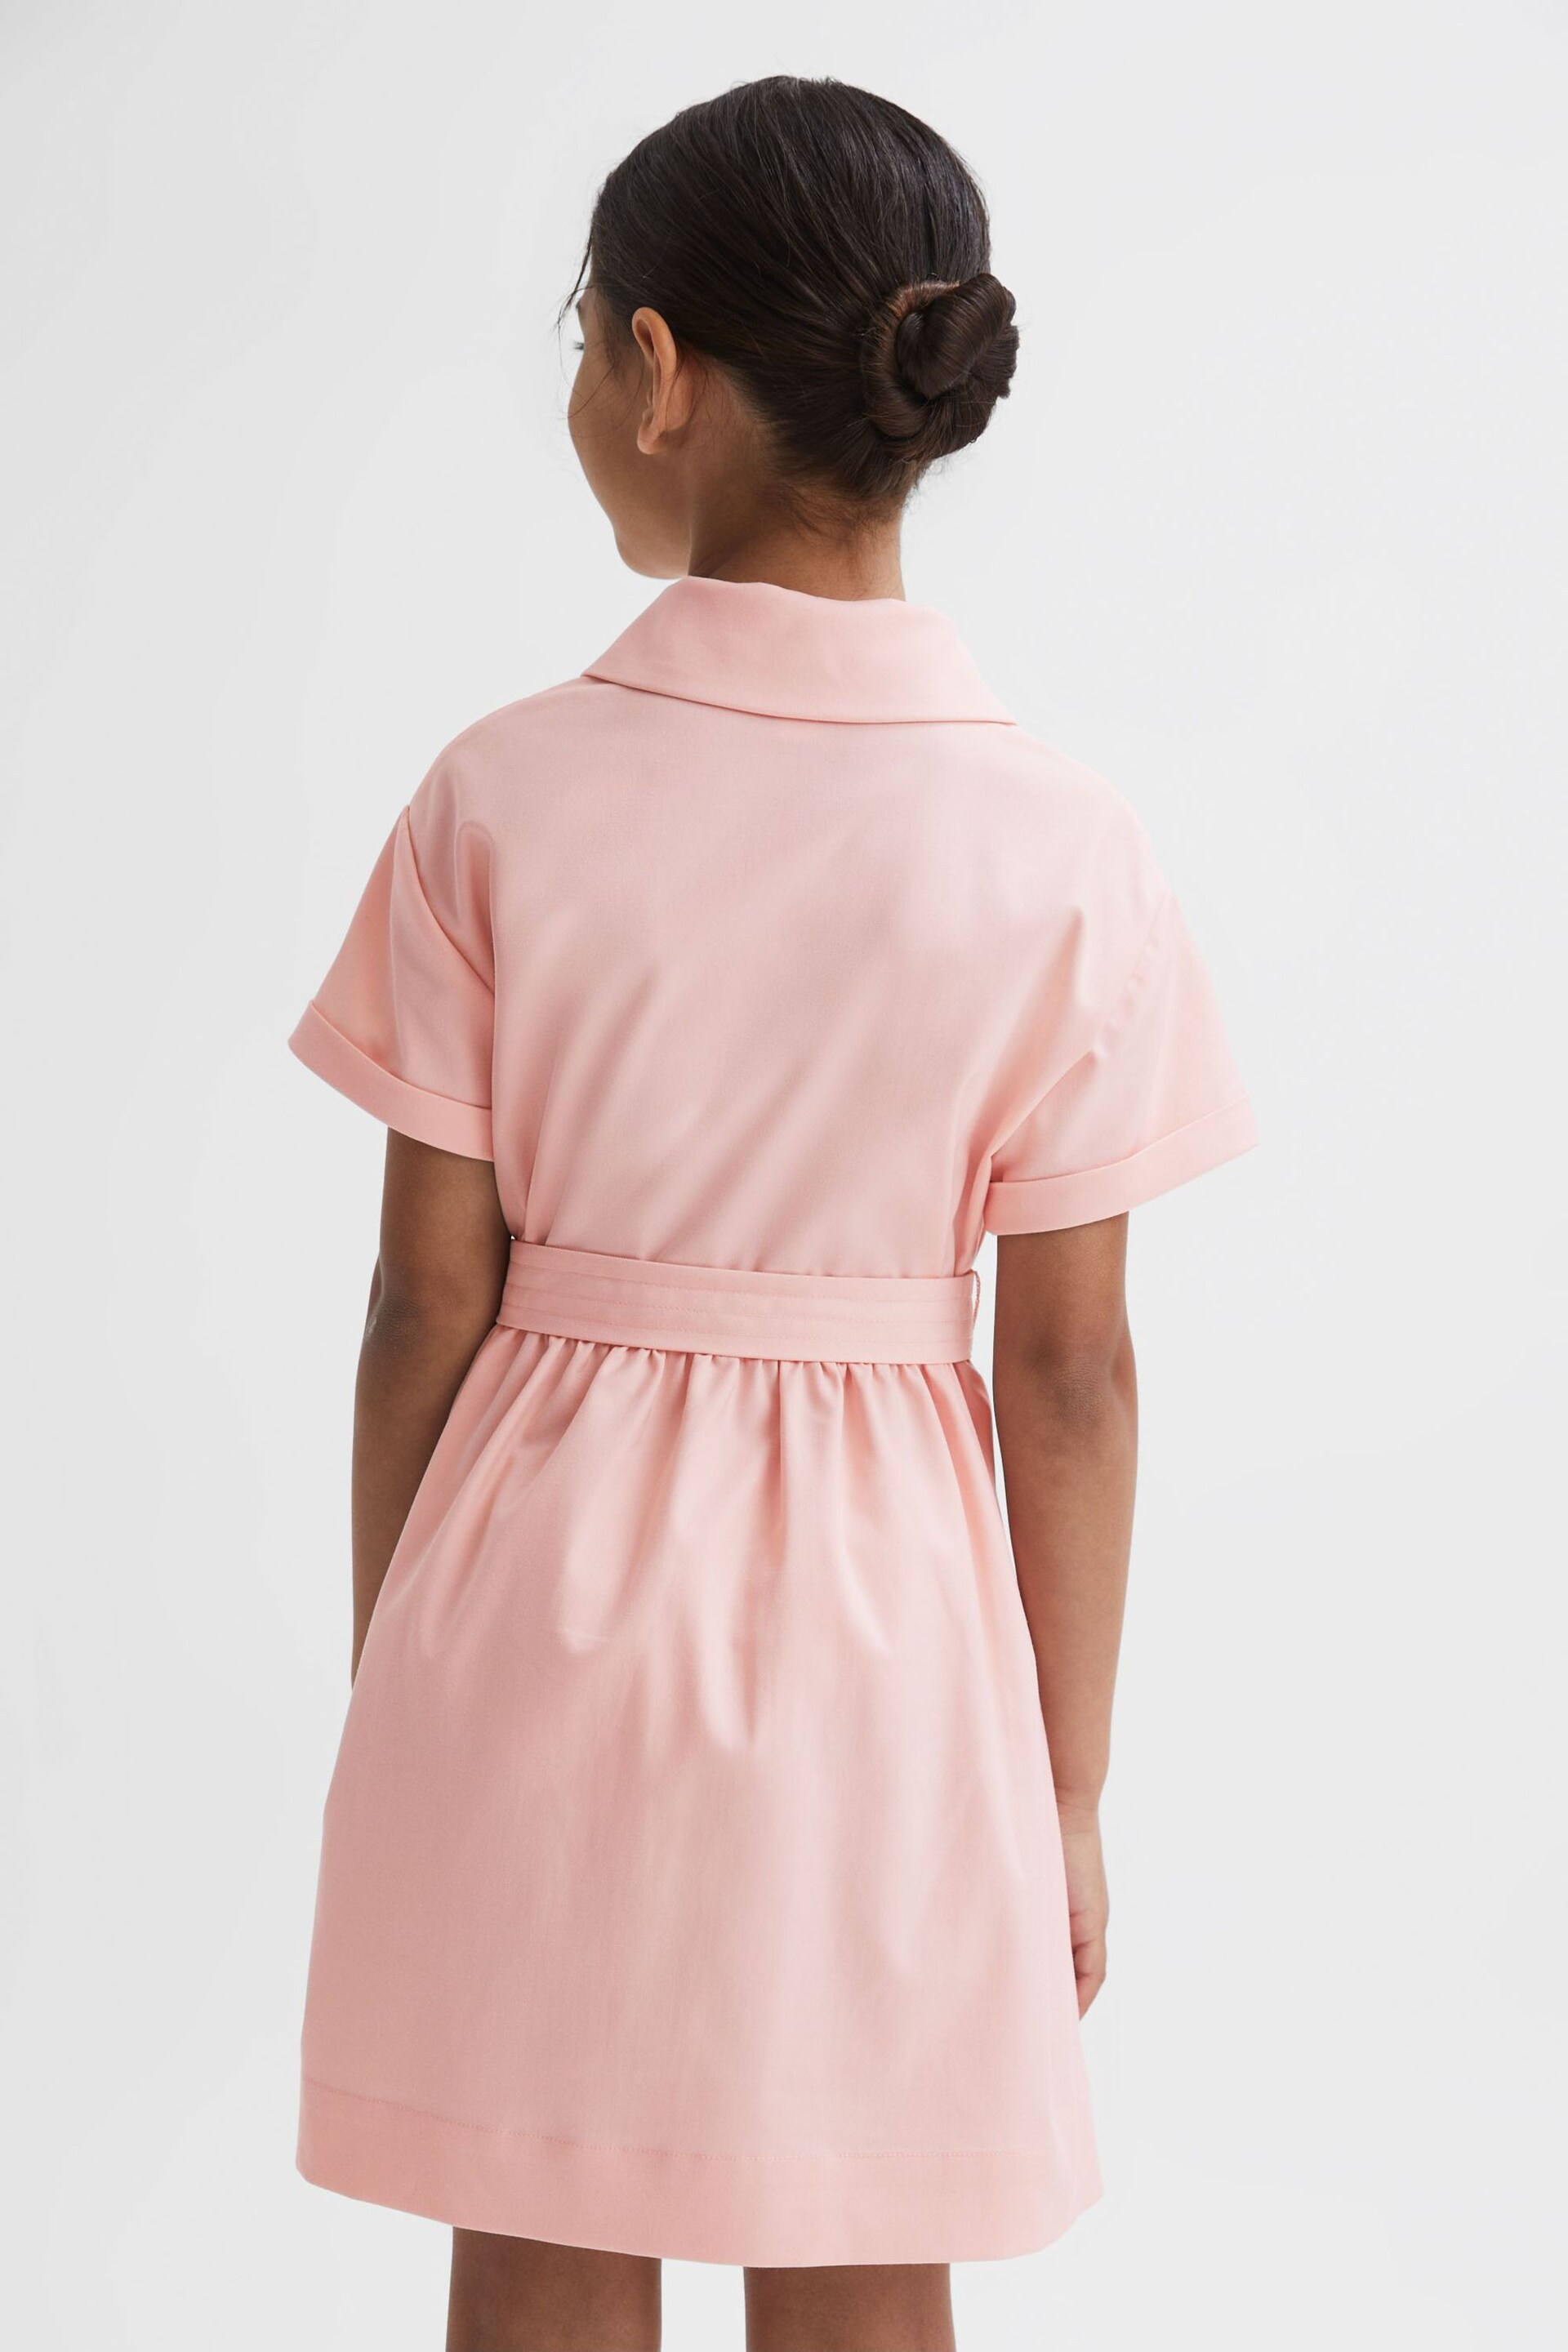 Reiss Pink Wren Junior Collared Belted Short Sleeve Dress - Image 4 of 5